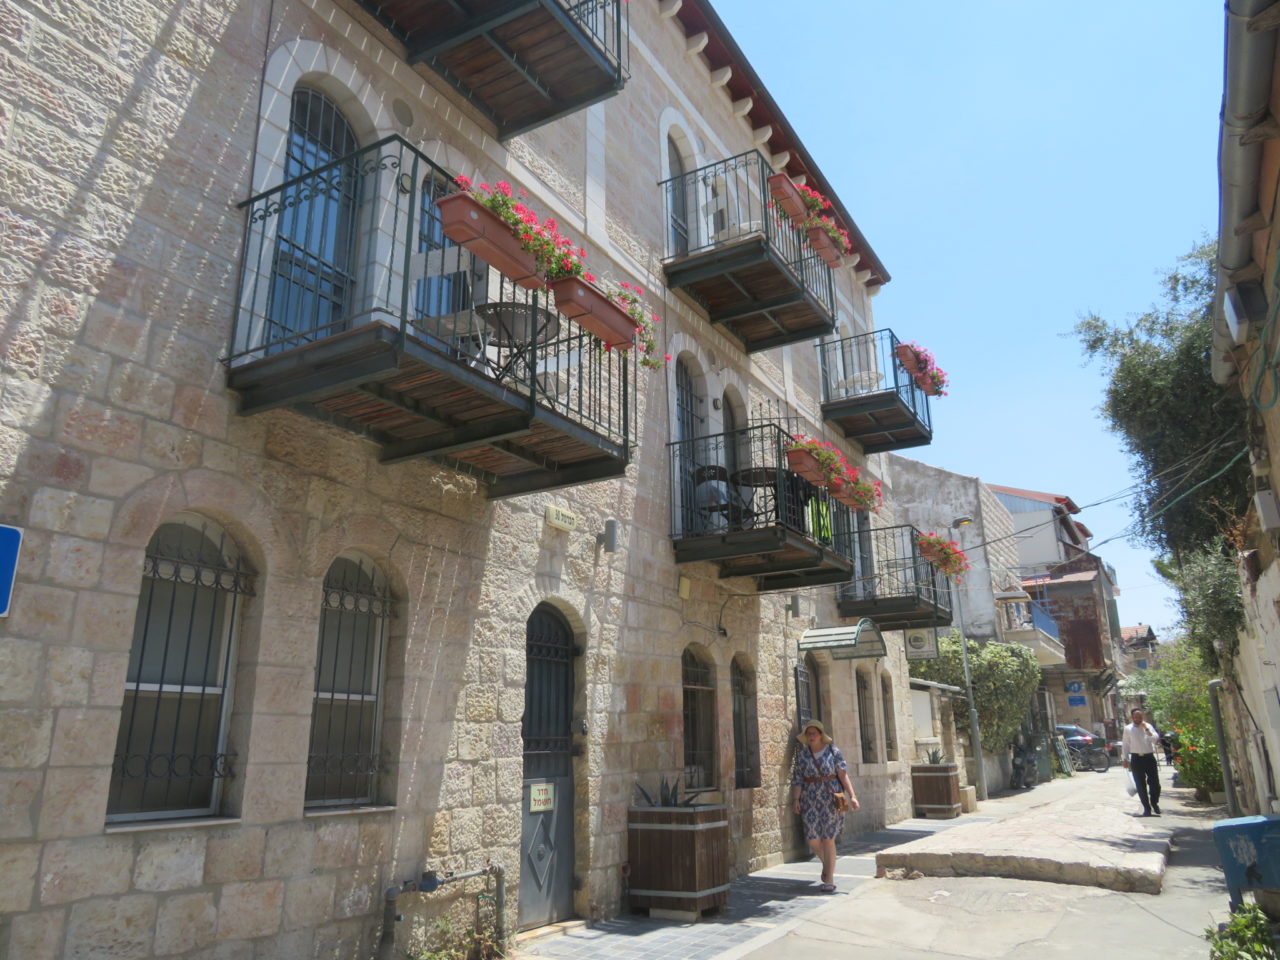 The joys of walking Jerusalem - the Nachlaot neighborhood